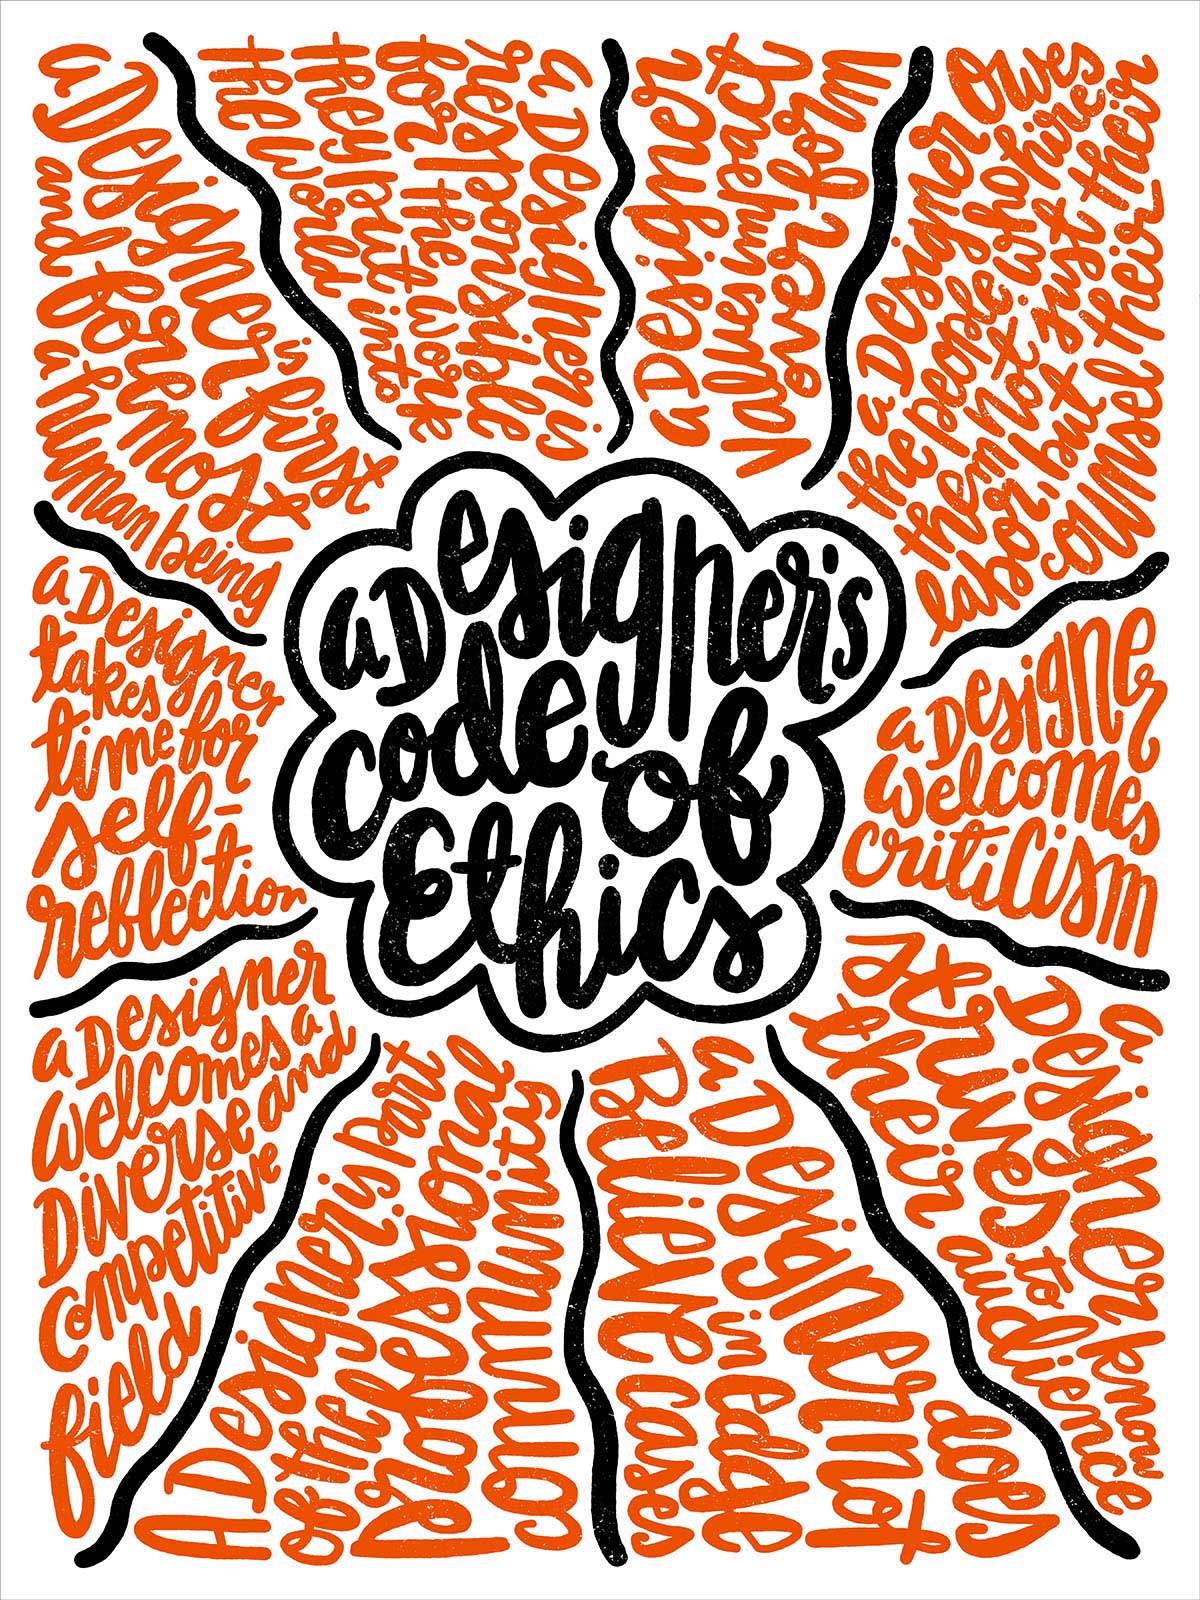 Carolyn Sewell, Design Code Of Ethics